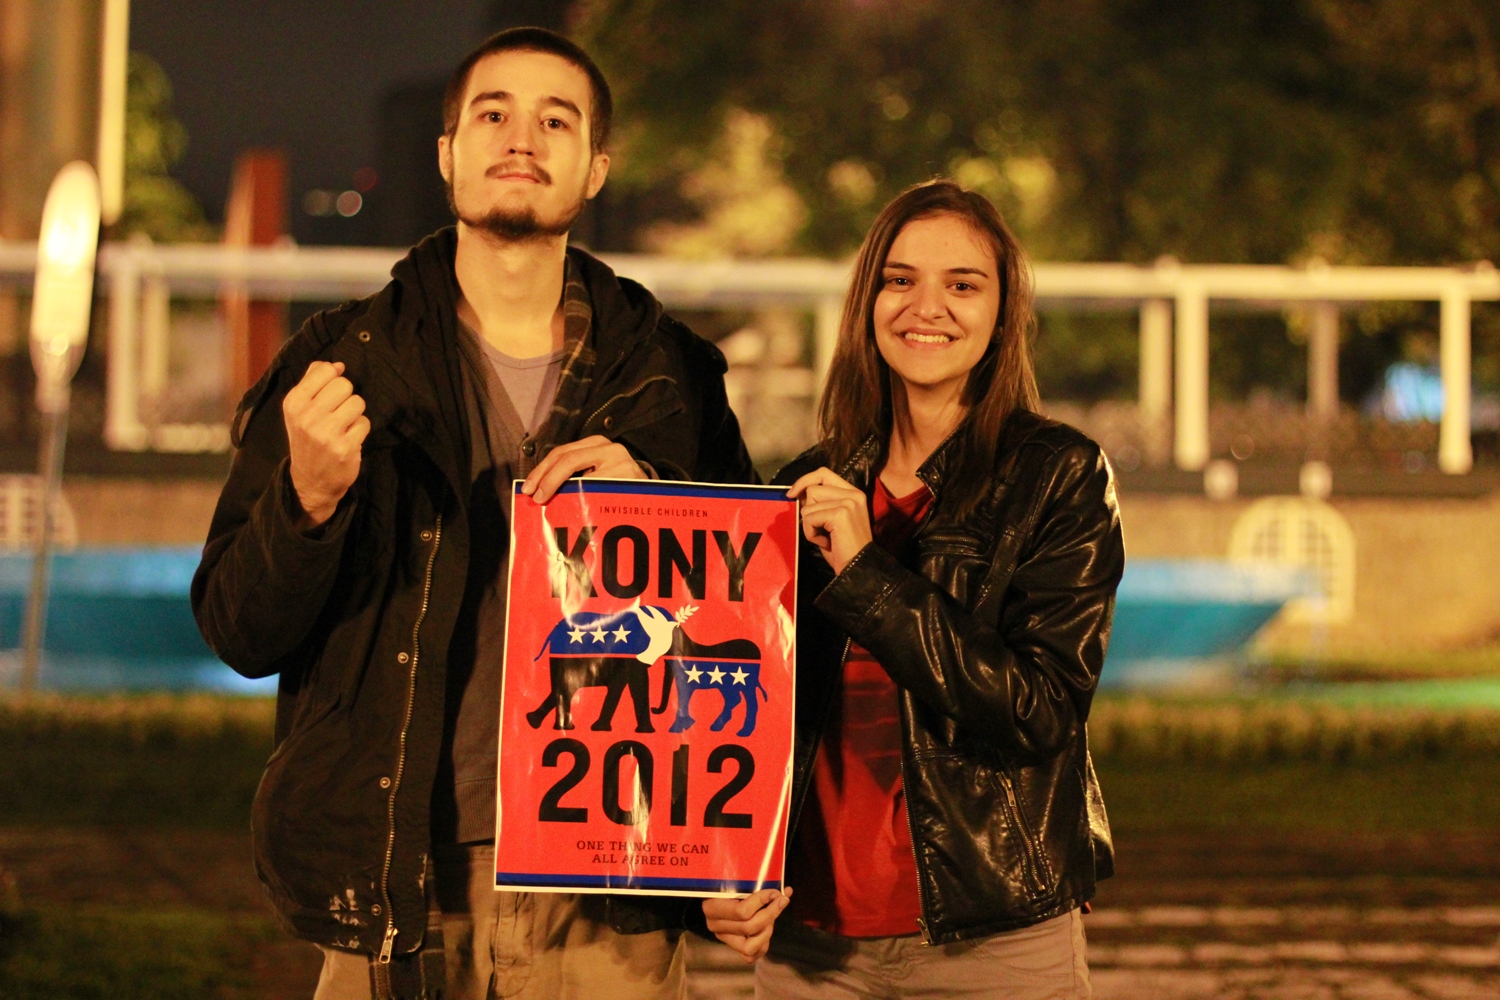 Tiago Iorc Cover The Night Kony 2012